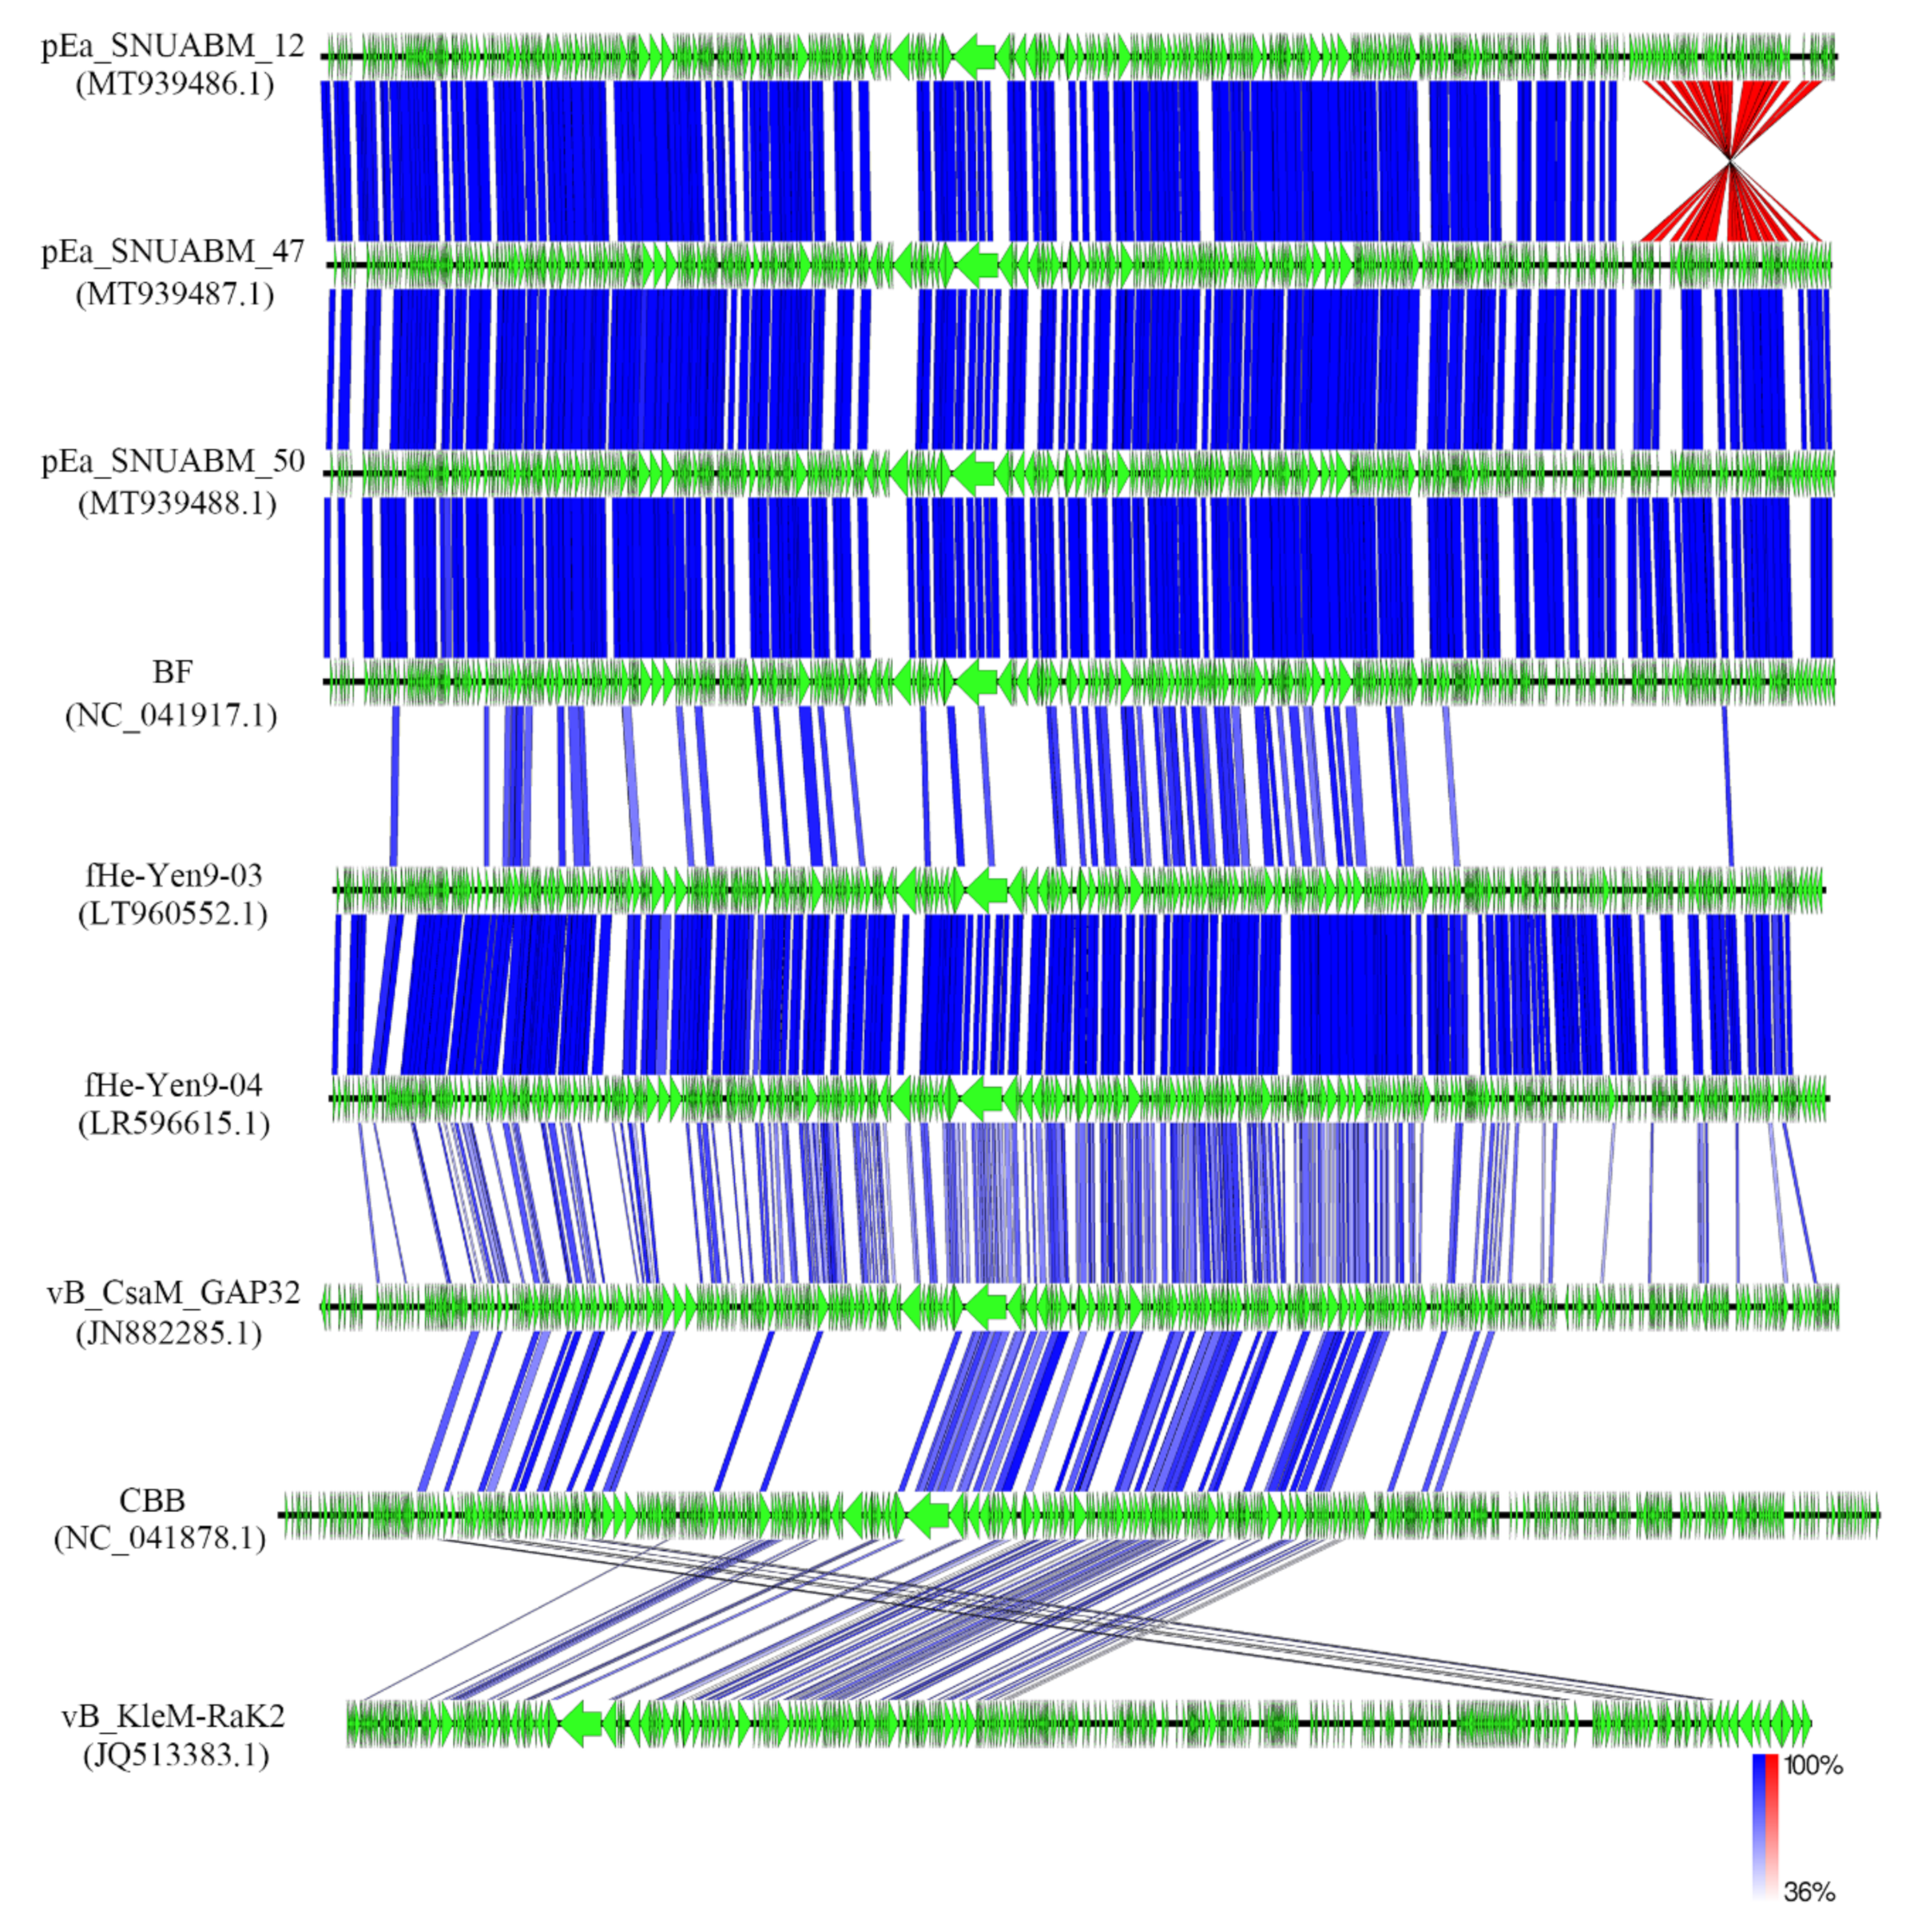 Jumbophage PCH45 evades type I, but not type III, CRISPR-Cas immunity.